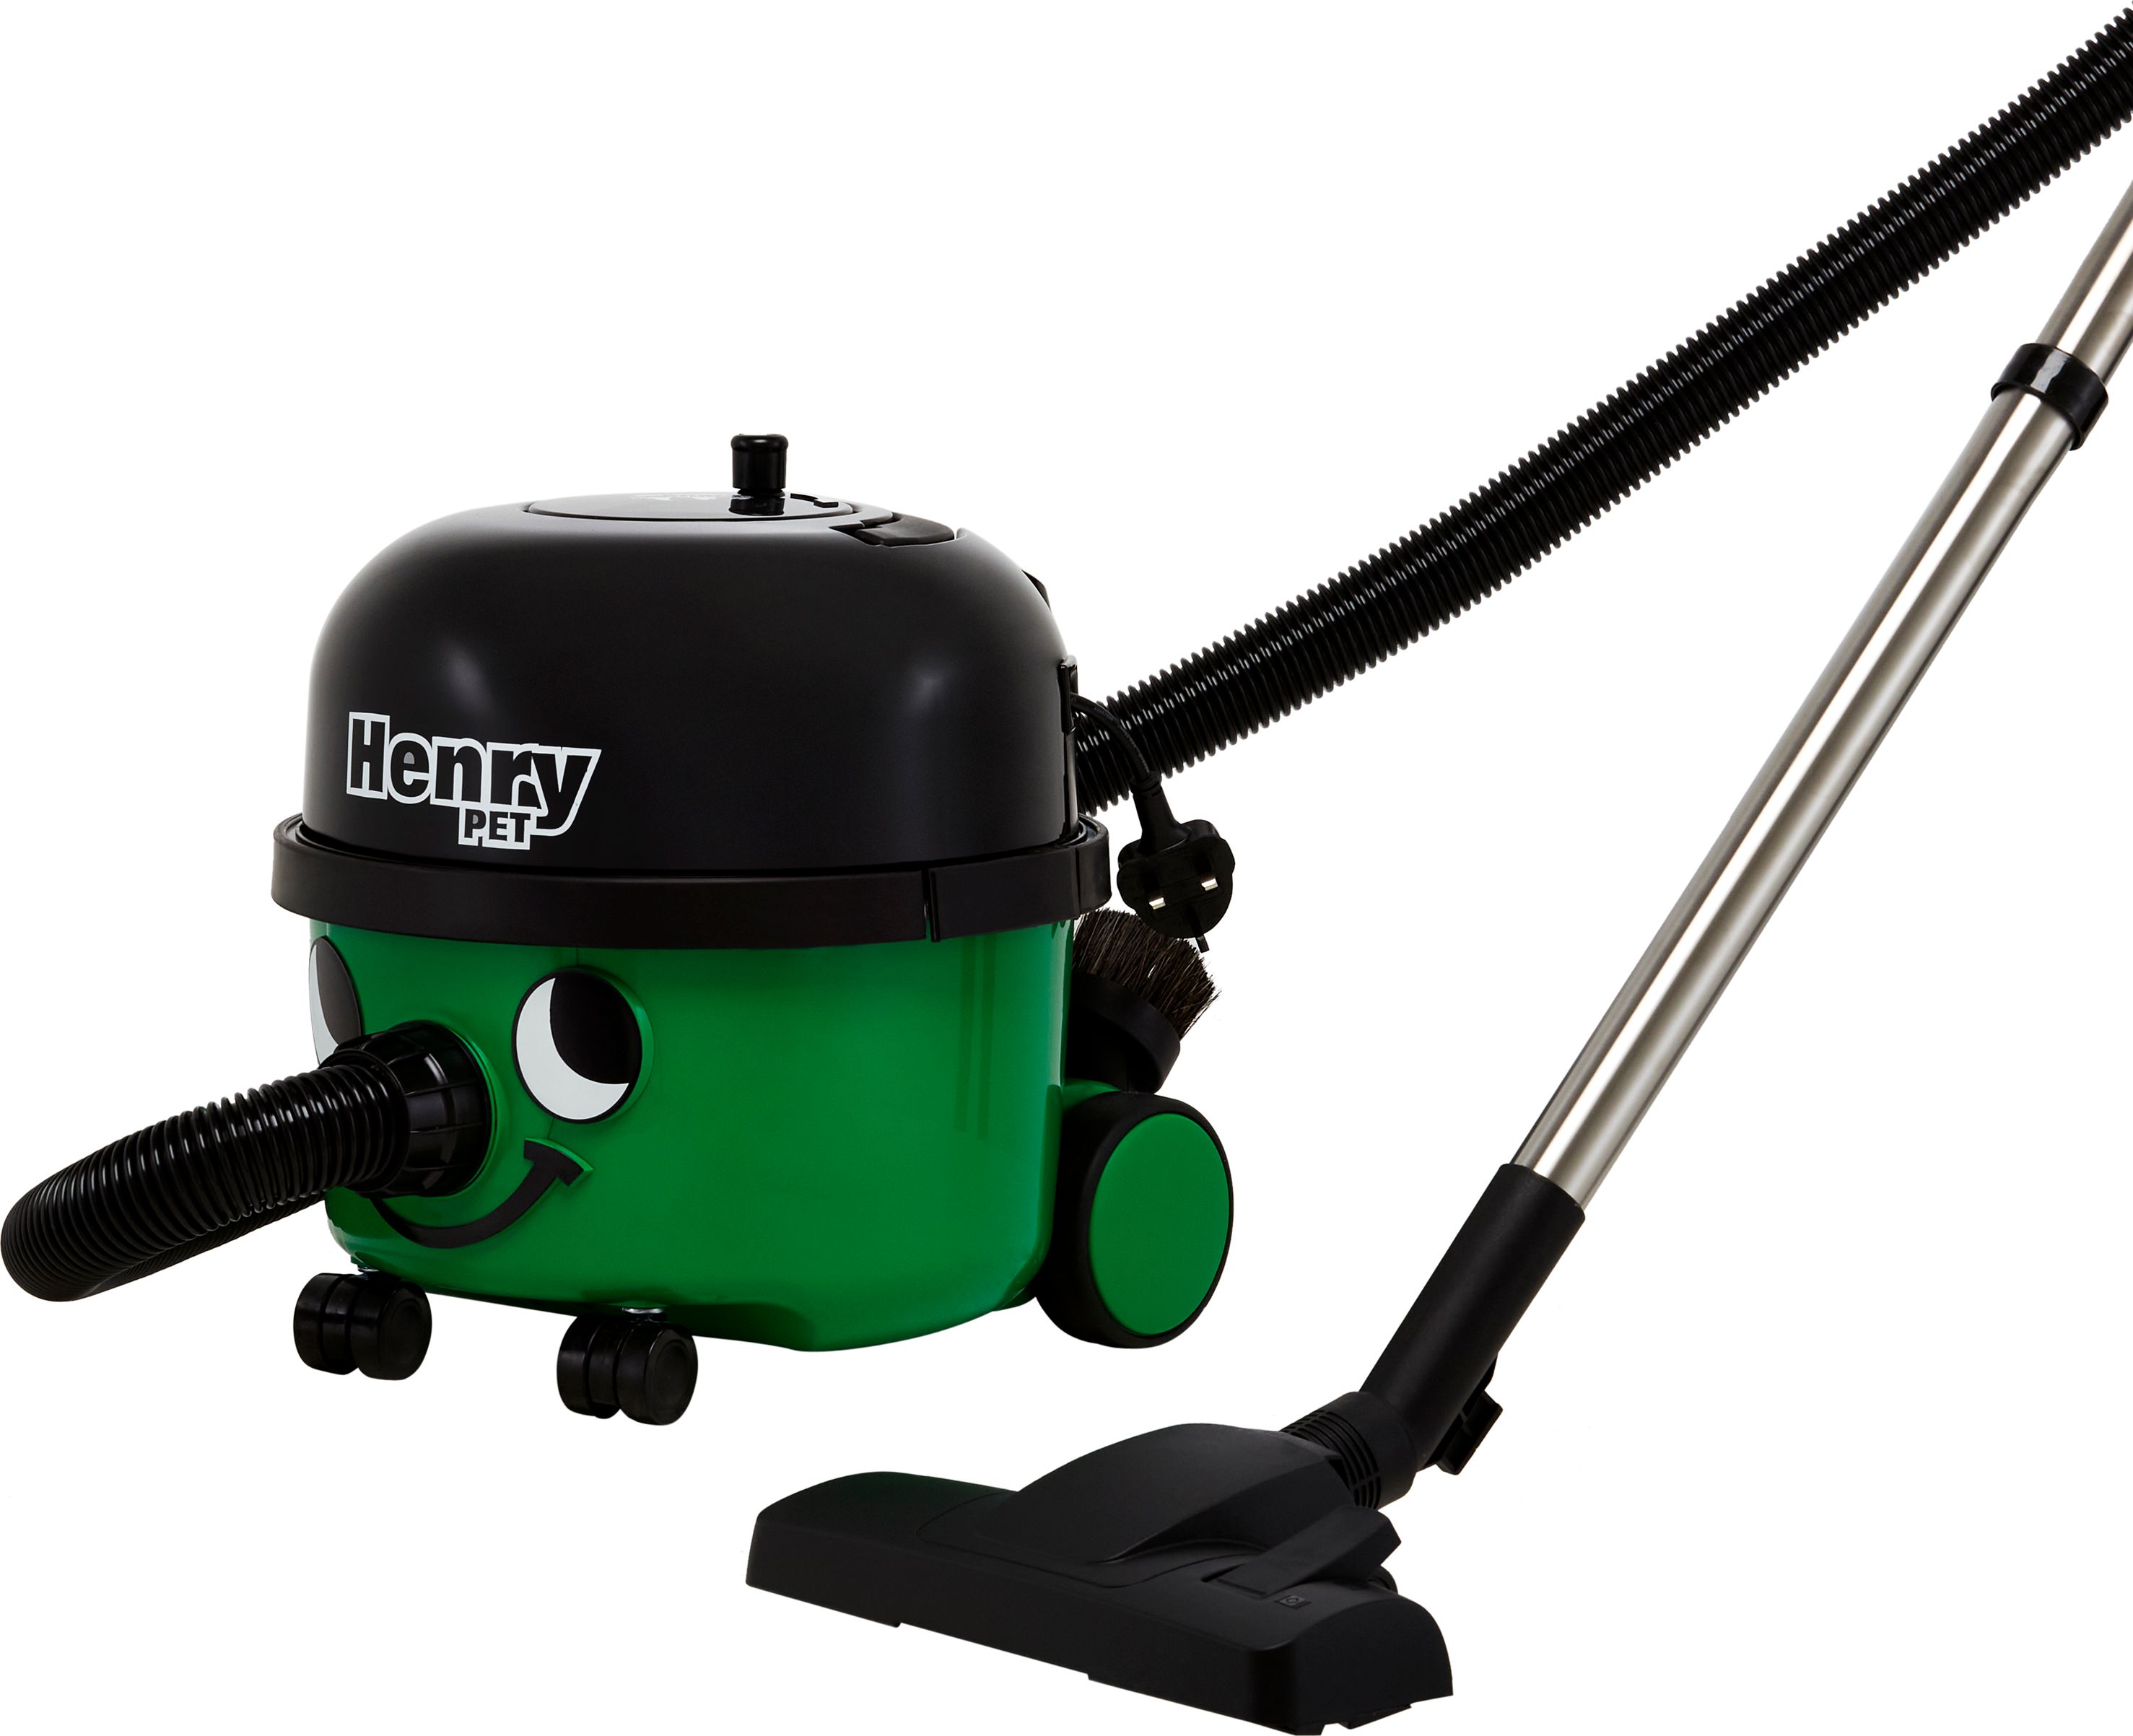 Henry Pet PET 200-11 Cylinder Vacuum Cleaner, Green